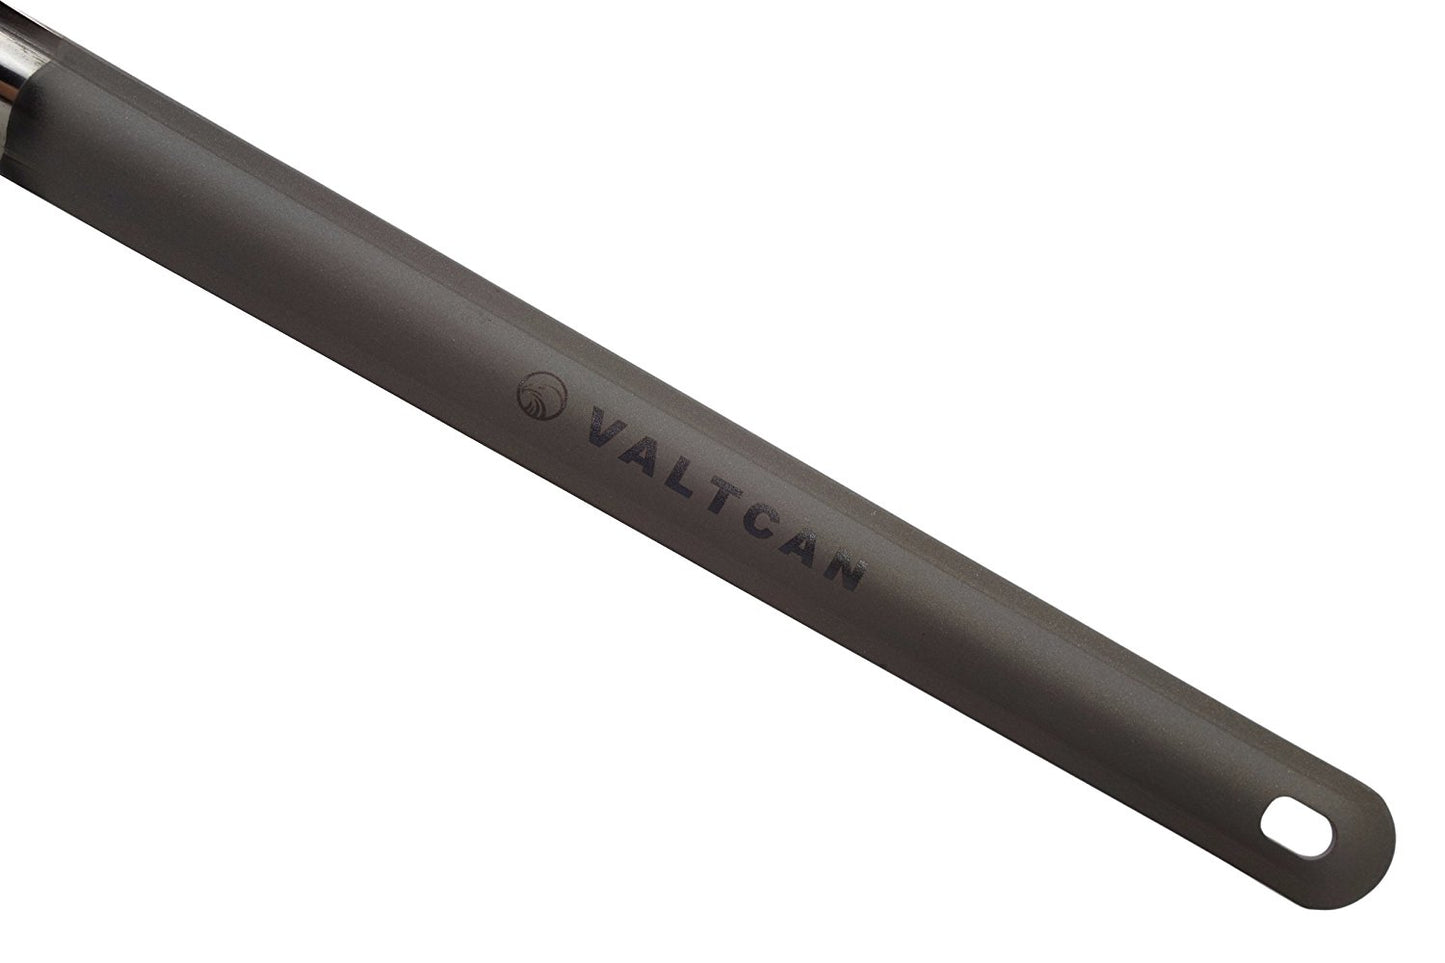 Valtcan Titanium Spork Long Handle Polished Bowl 9in length 17g